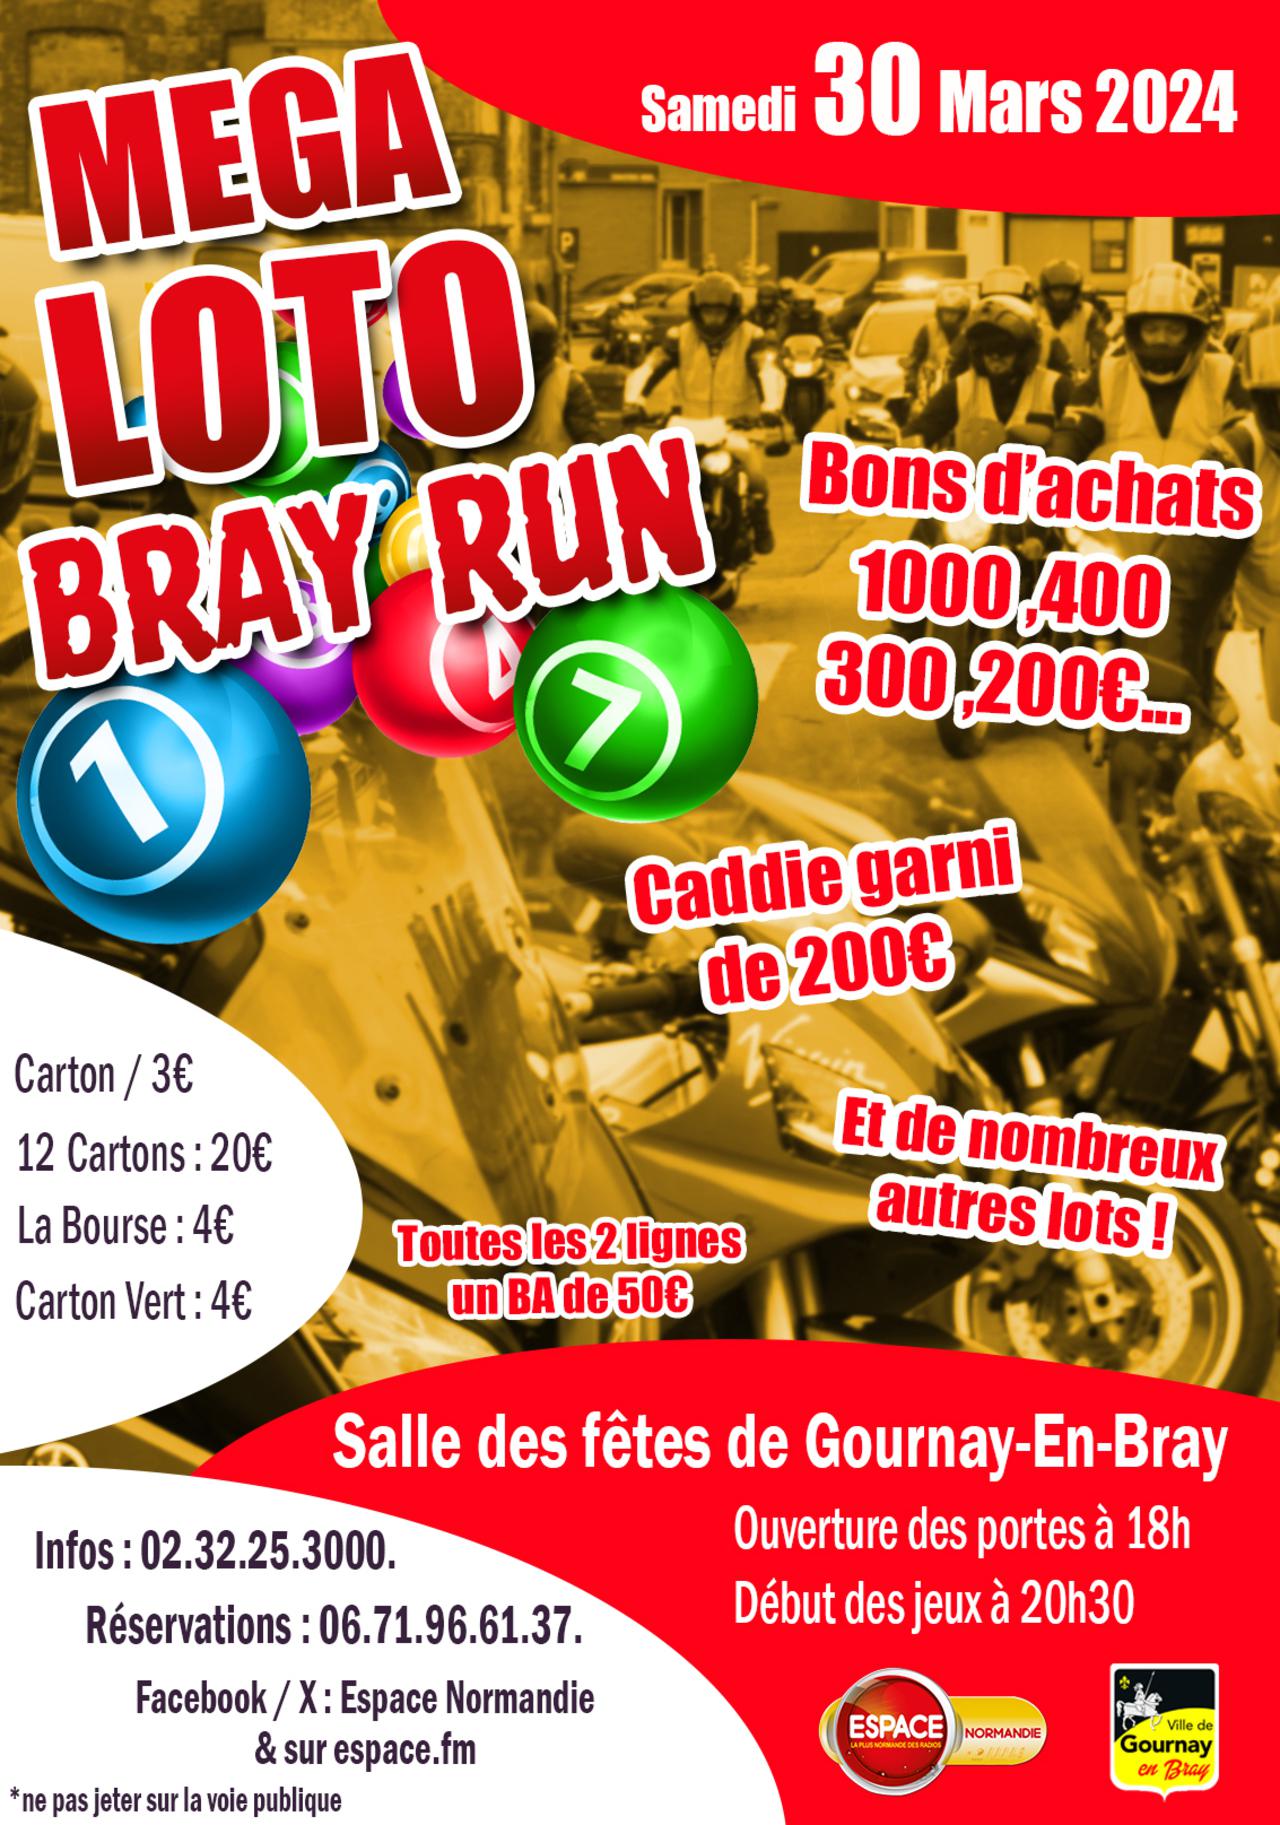 Méga Loto Bray Run, Samedi 30 Mars à Gournay-En-Bray, avec Espace !